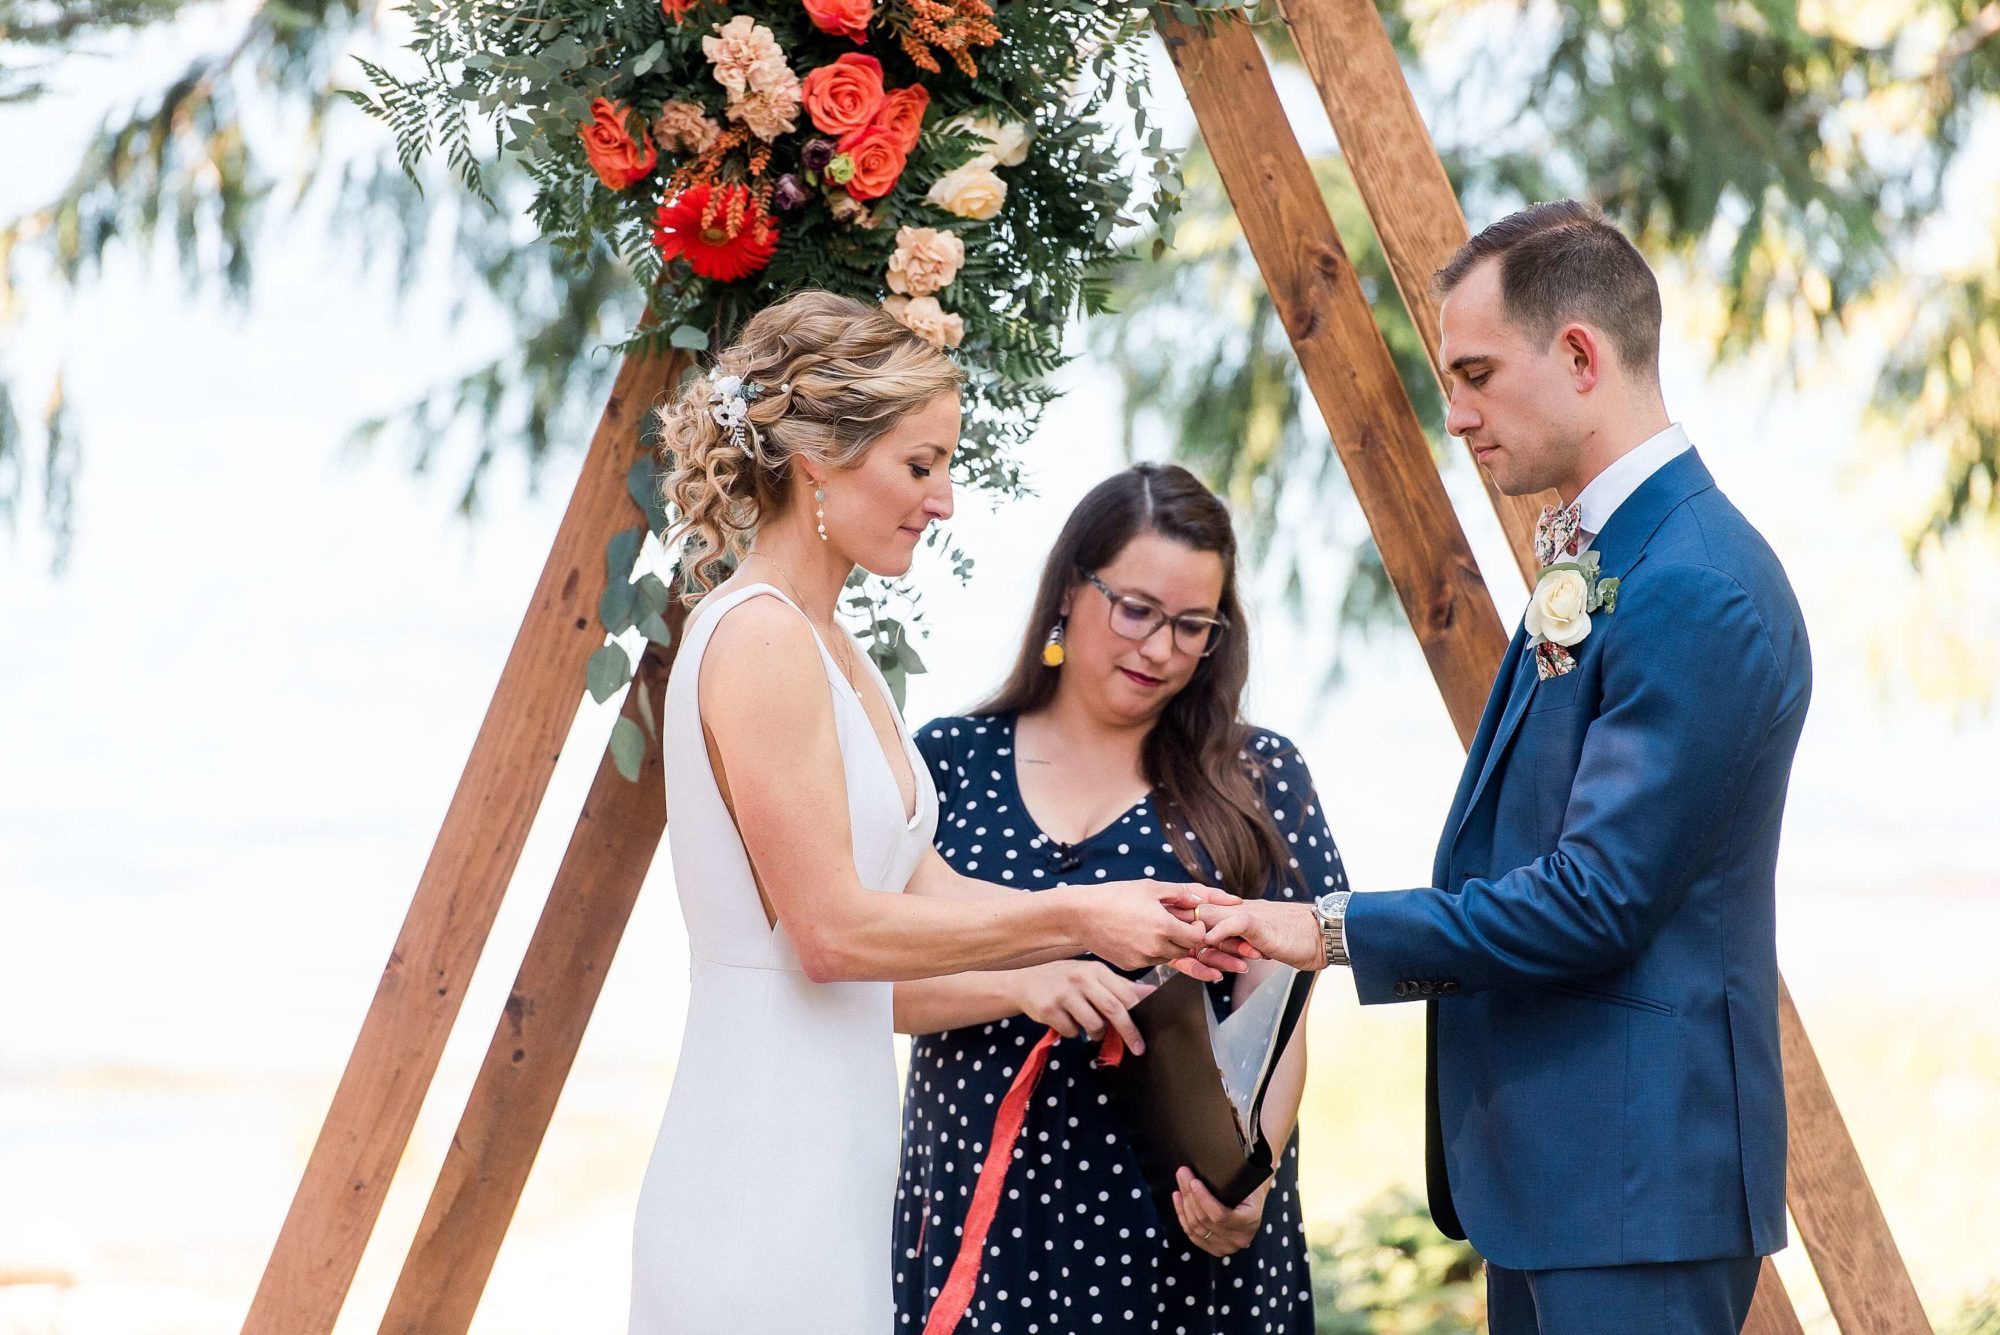 Bride and groom exchanging rings under flowers